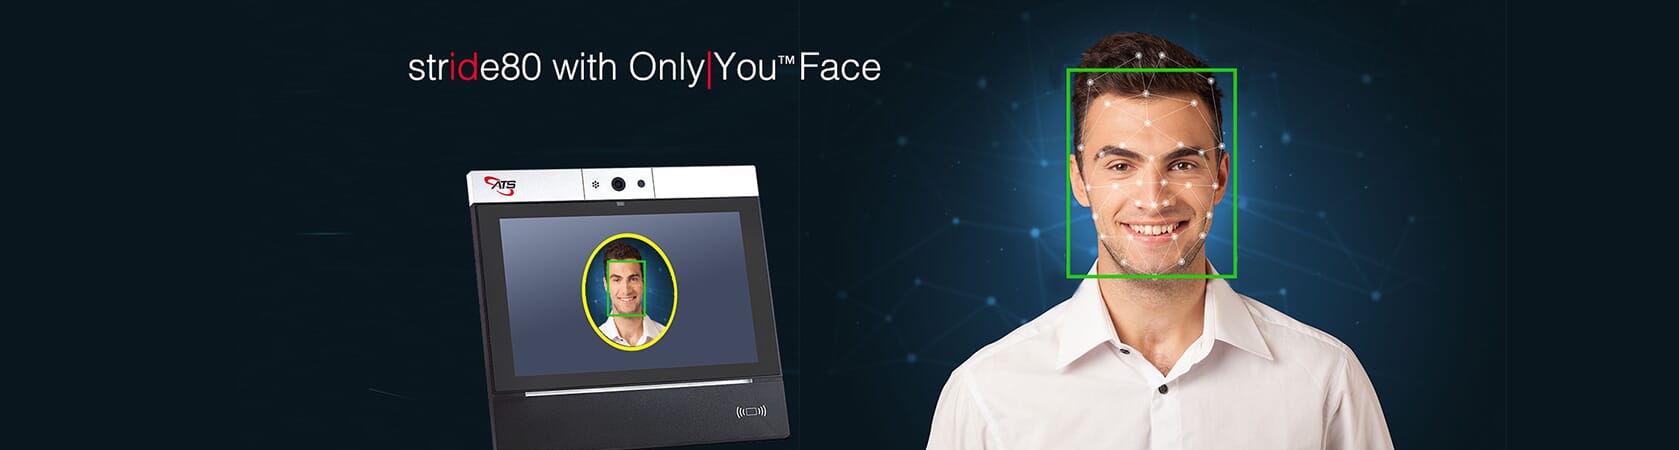 facial recognition time clock